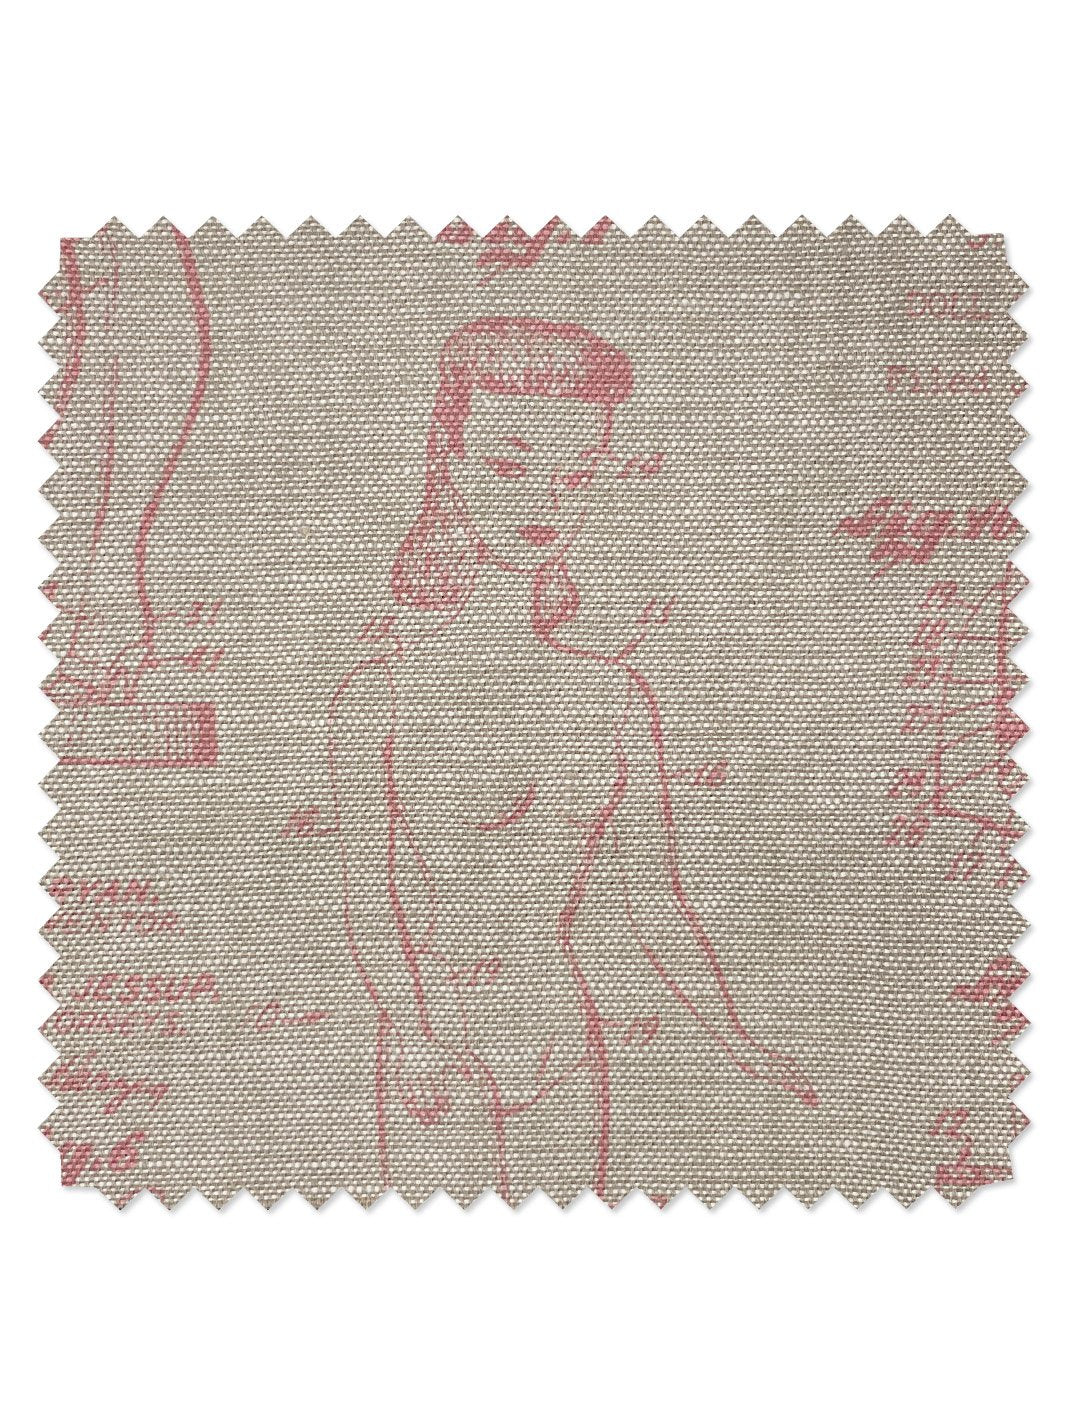 'Fabric by the Yard - Barbie™ Blueprint - Ballet Slipper on Flax Linen